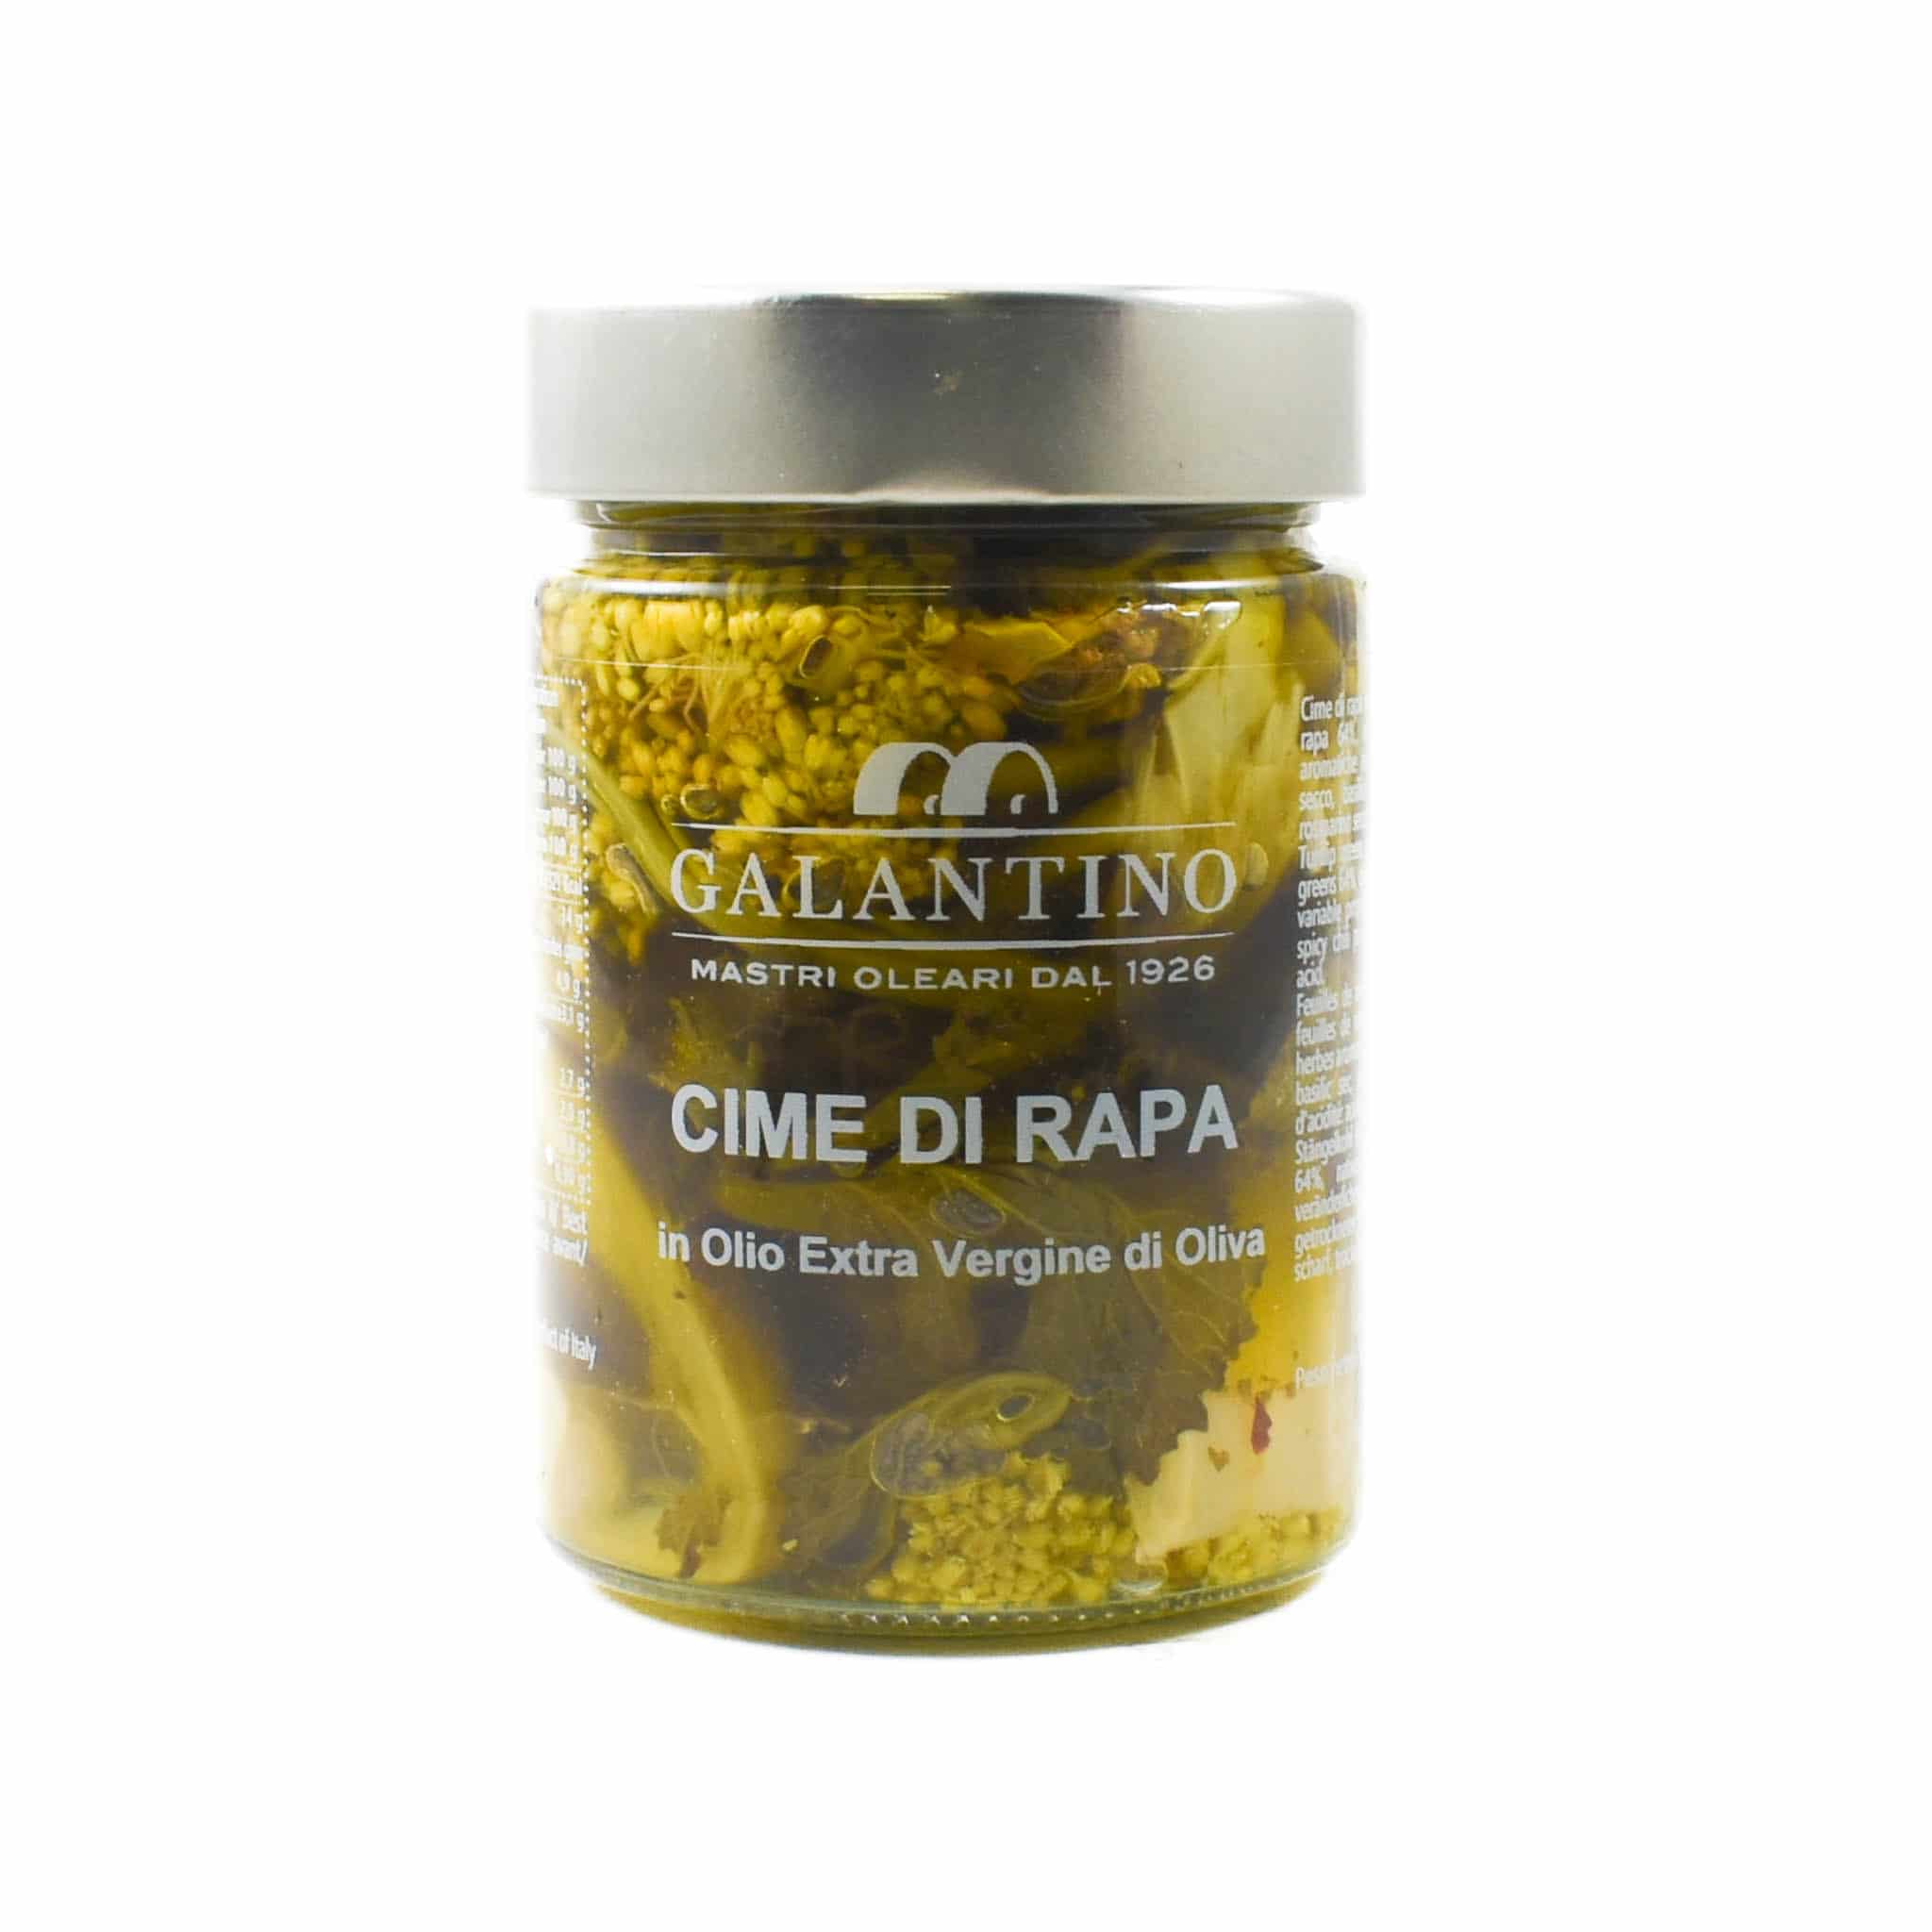 Galantino Turnip Tops (Cime di Rape) in Extra Virgin Olive Oil, 320g